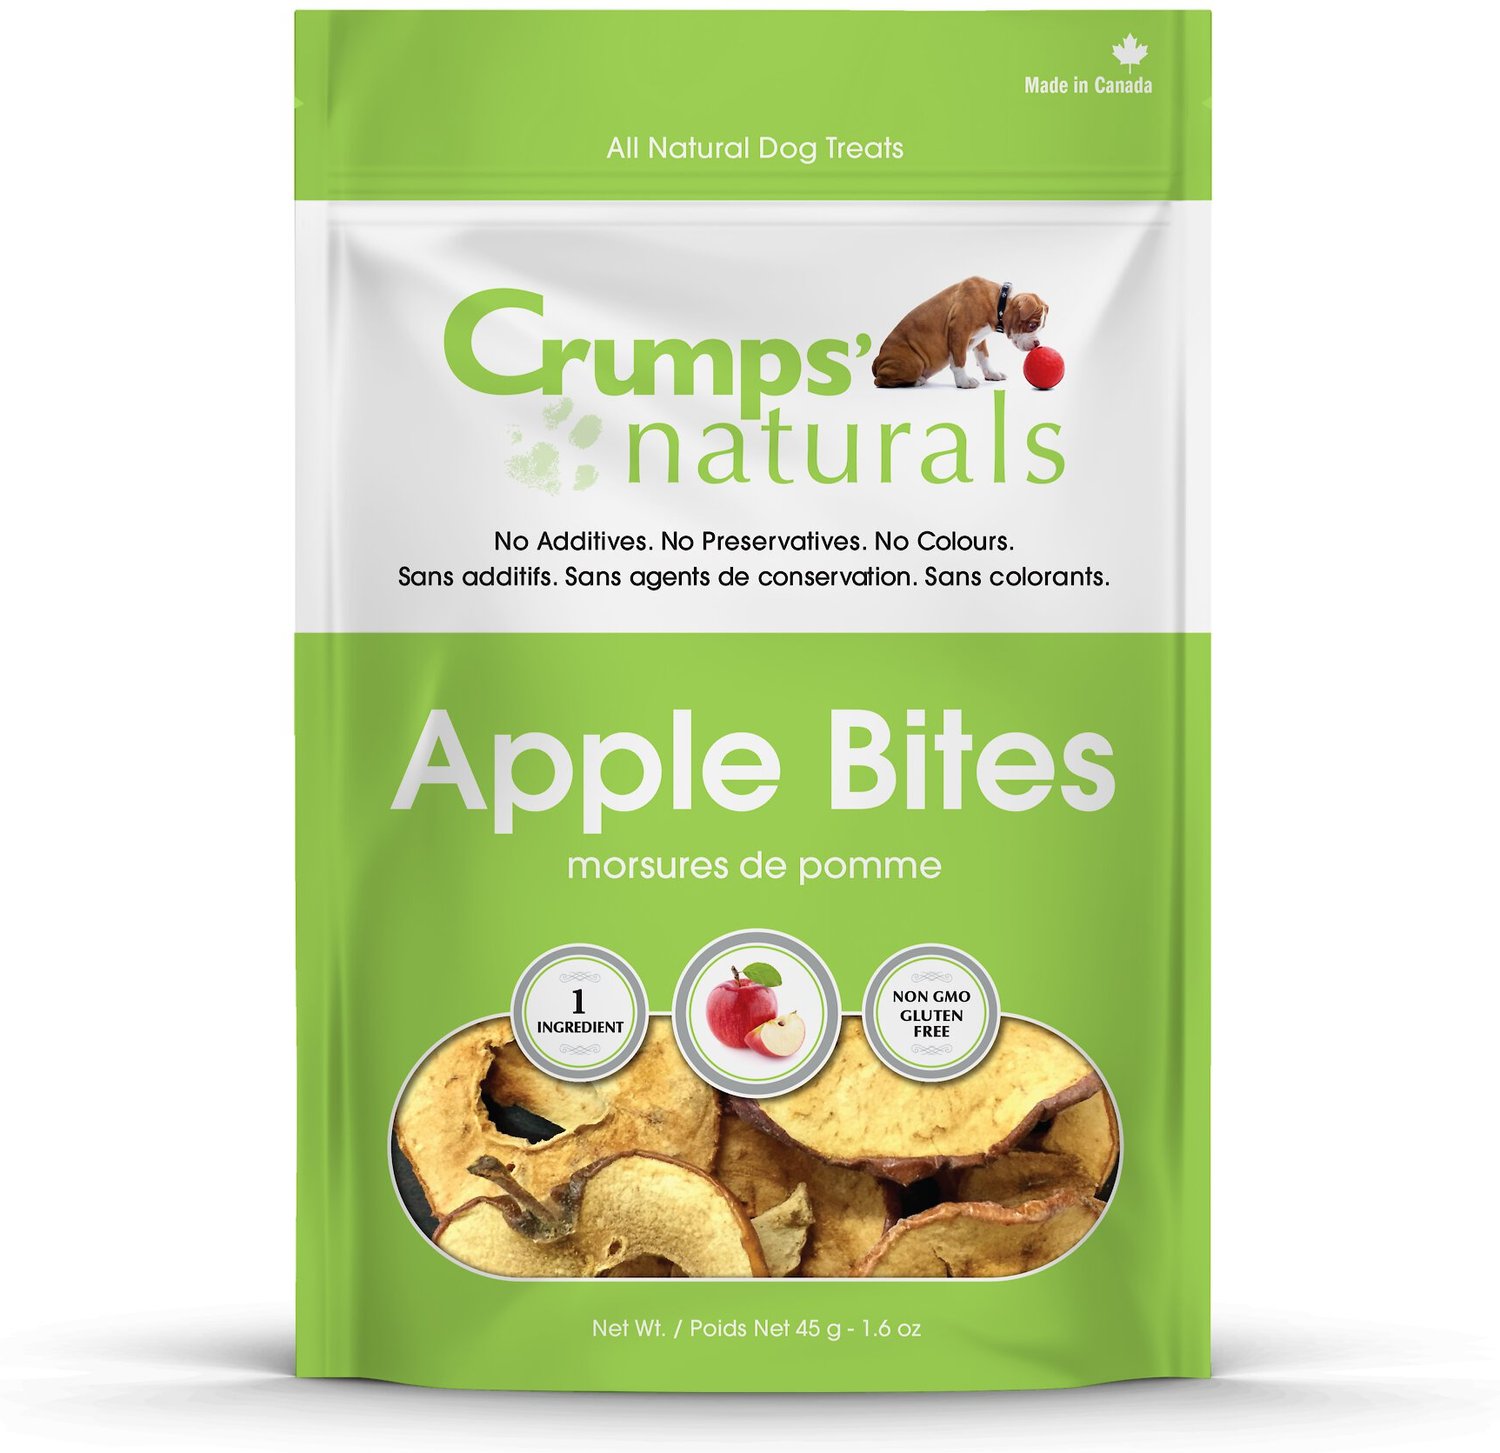 Crumps' Naturals Apple Bites Grain-Free Dehydrated Dog Treats